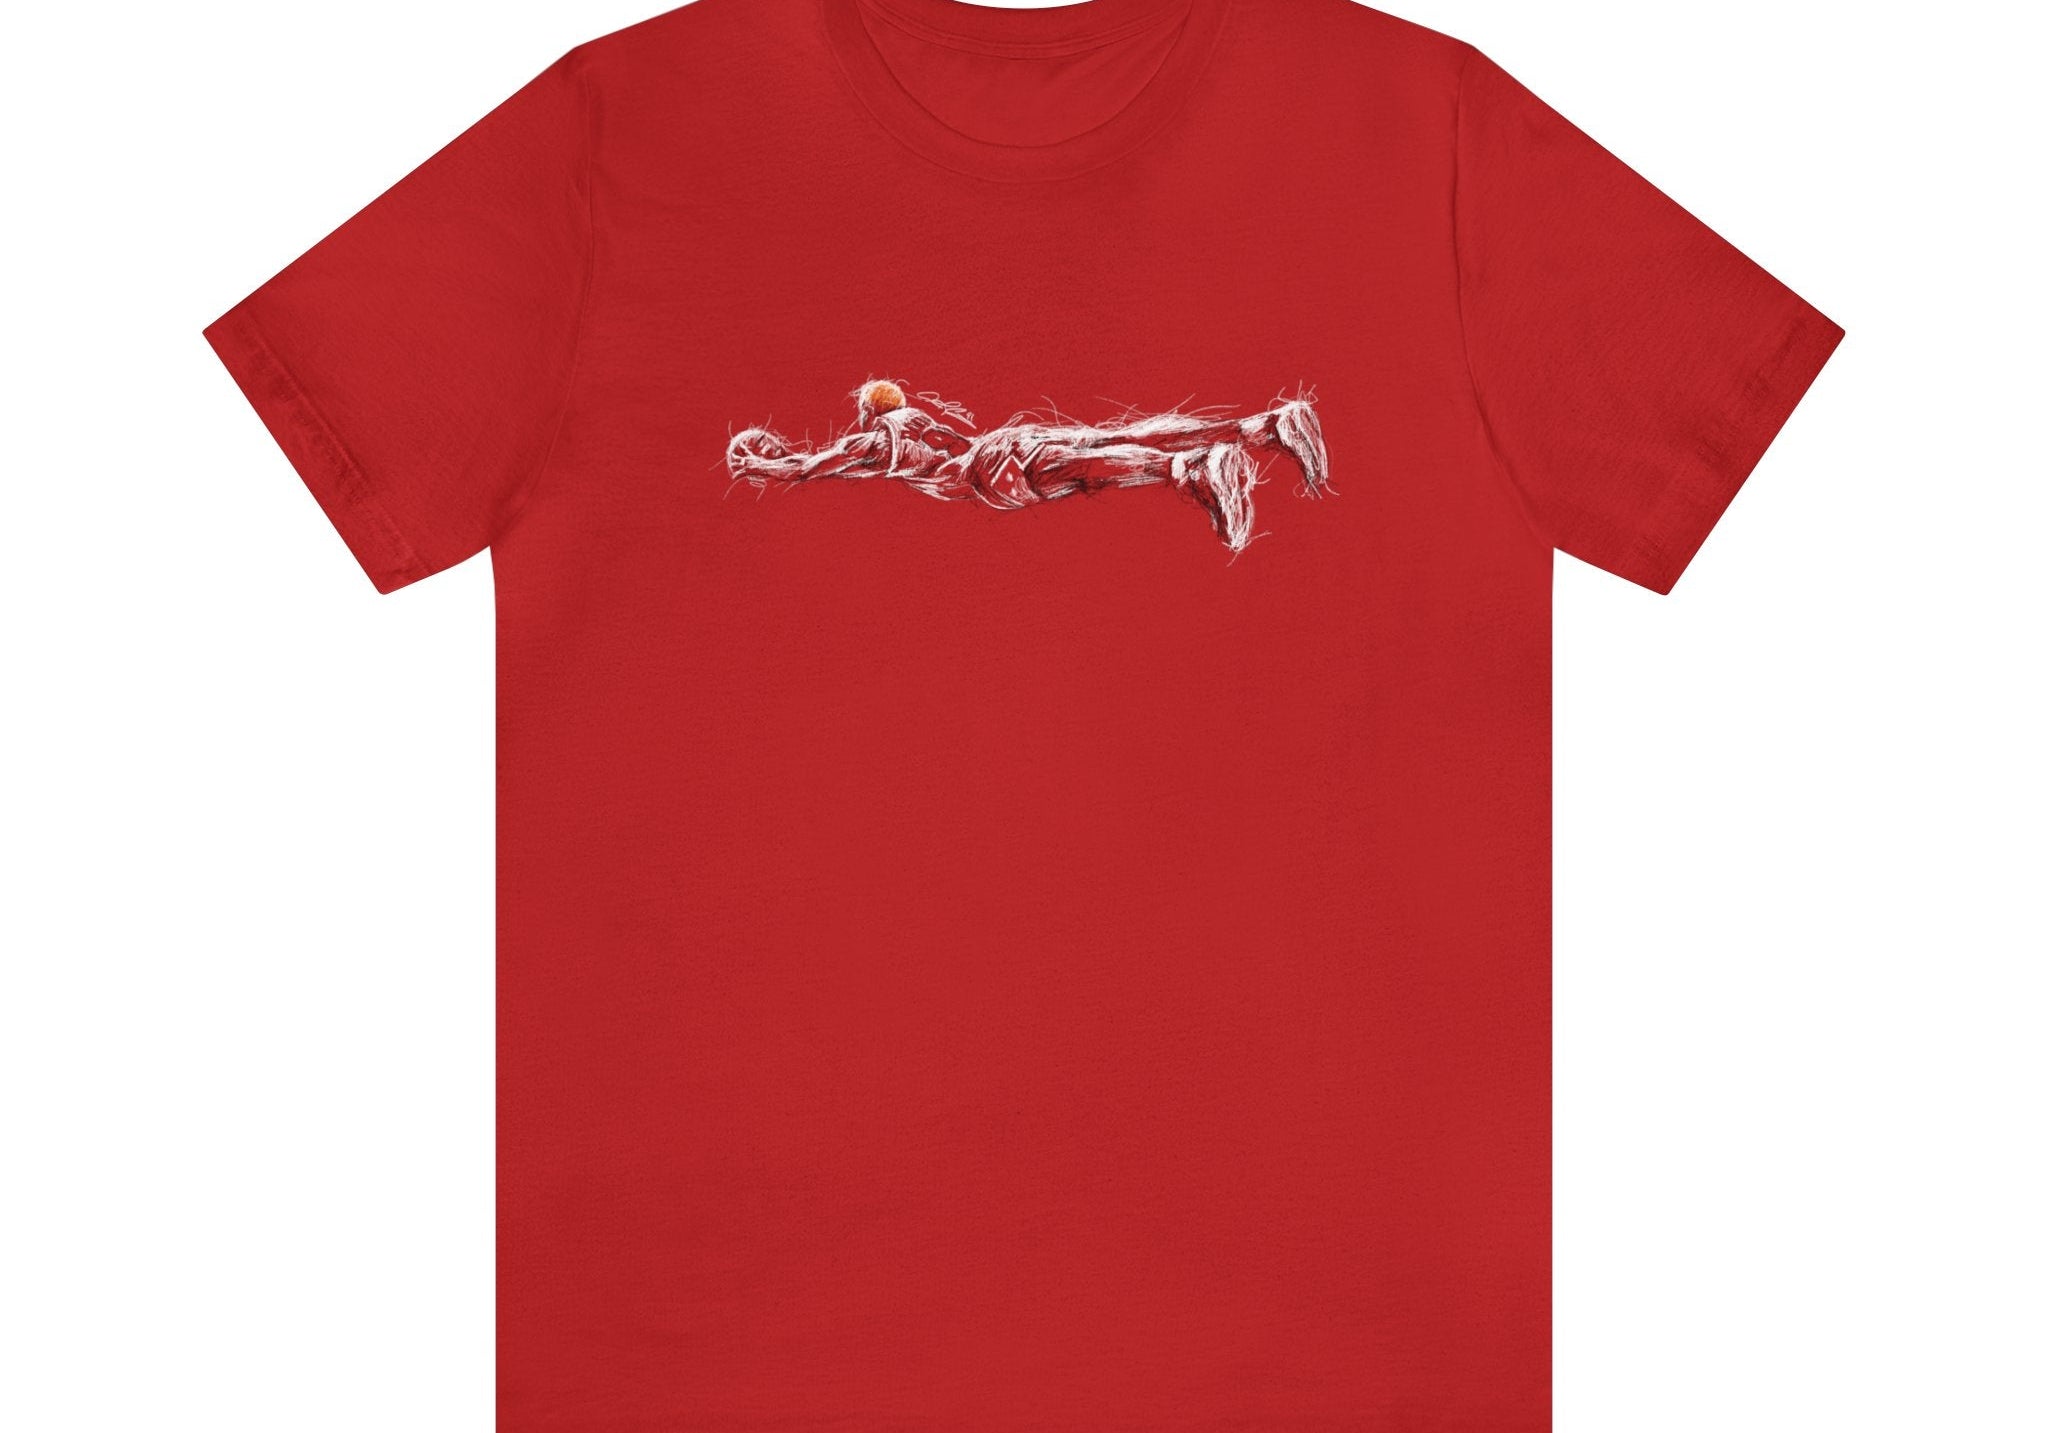 Dennis Rodman | Unixex T-Shirt - Androo's Art